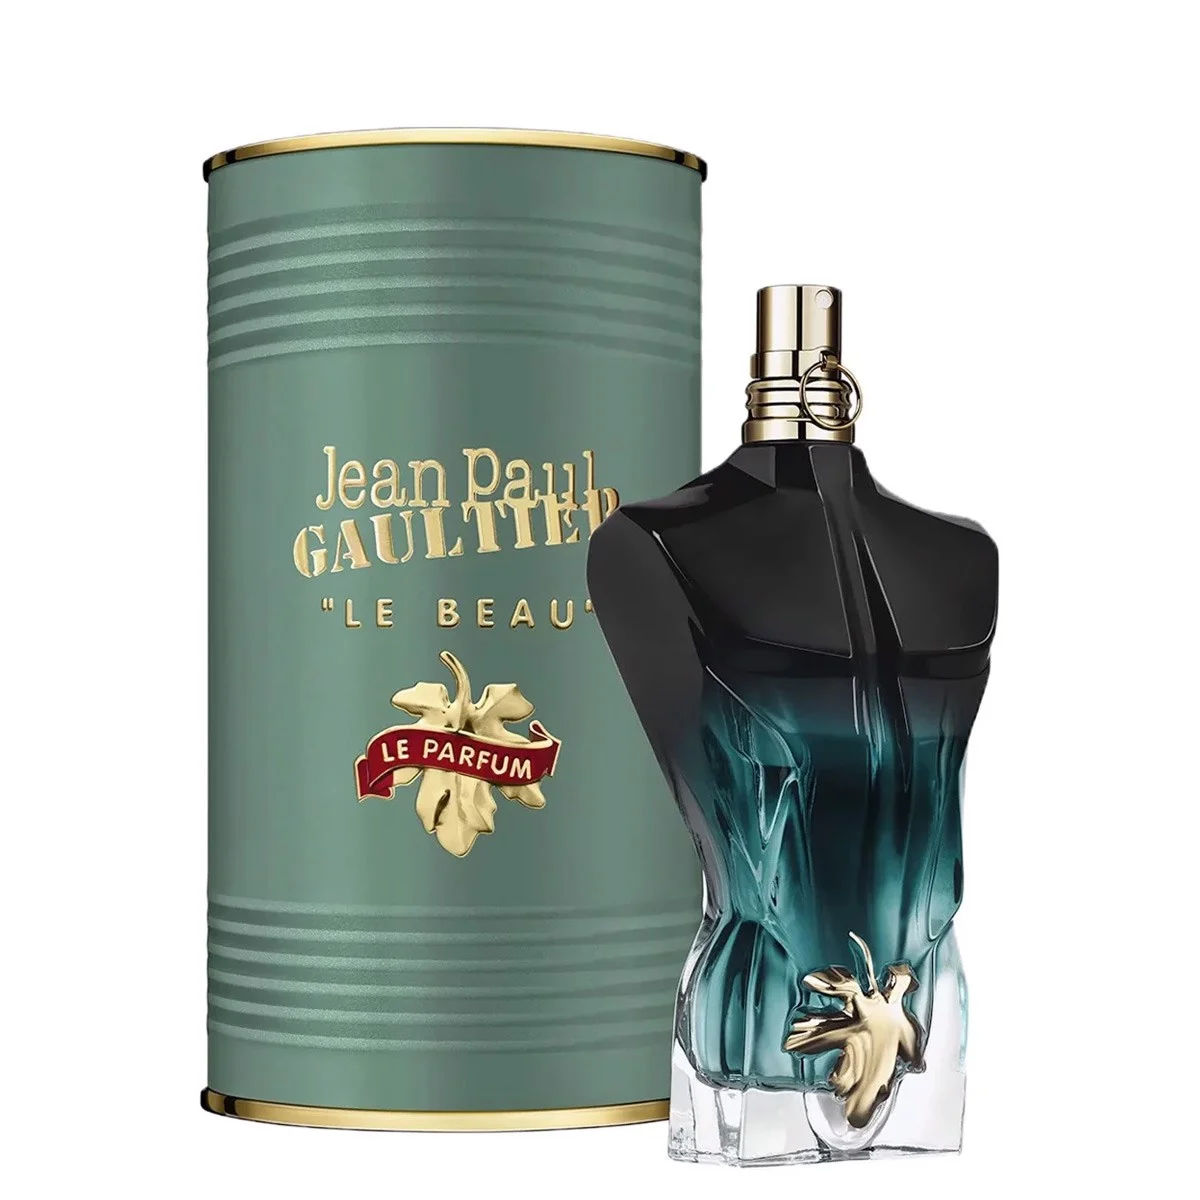 JEAN PAUL GAULTIER - Le Beau Le Parfum EDP 75ml